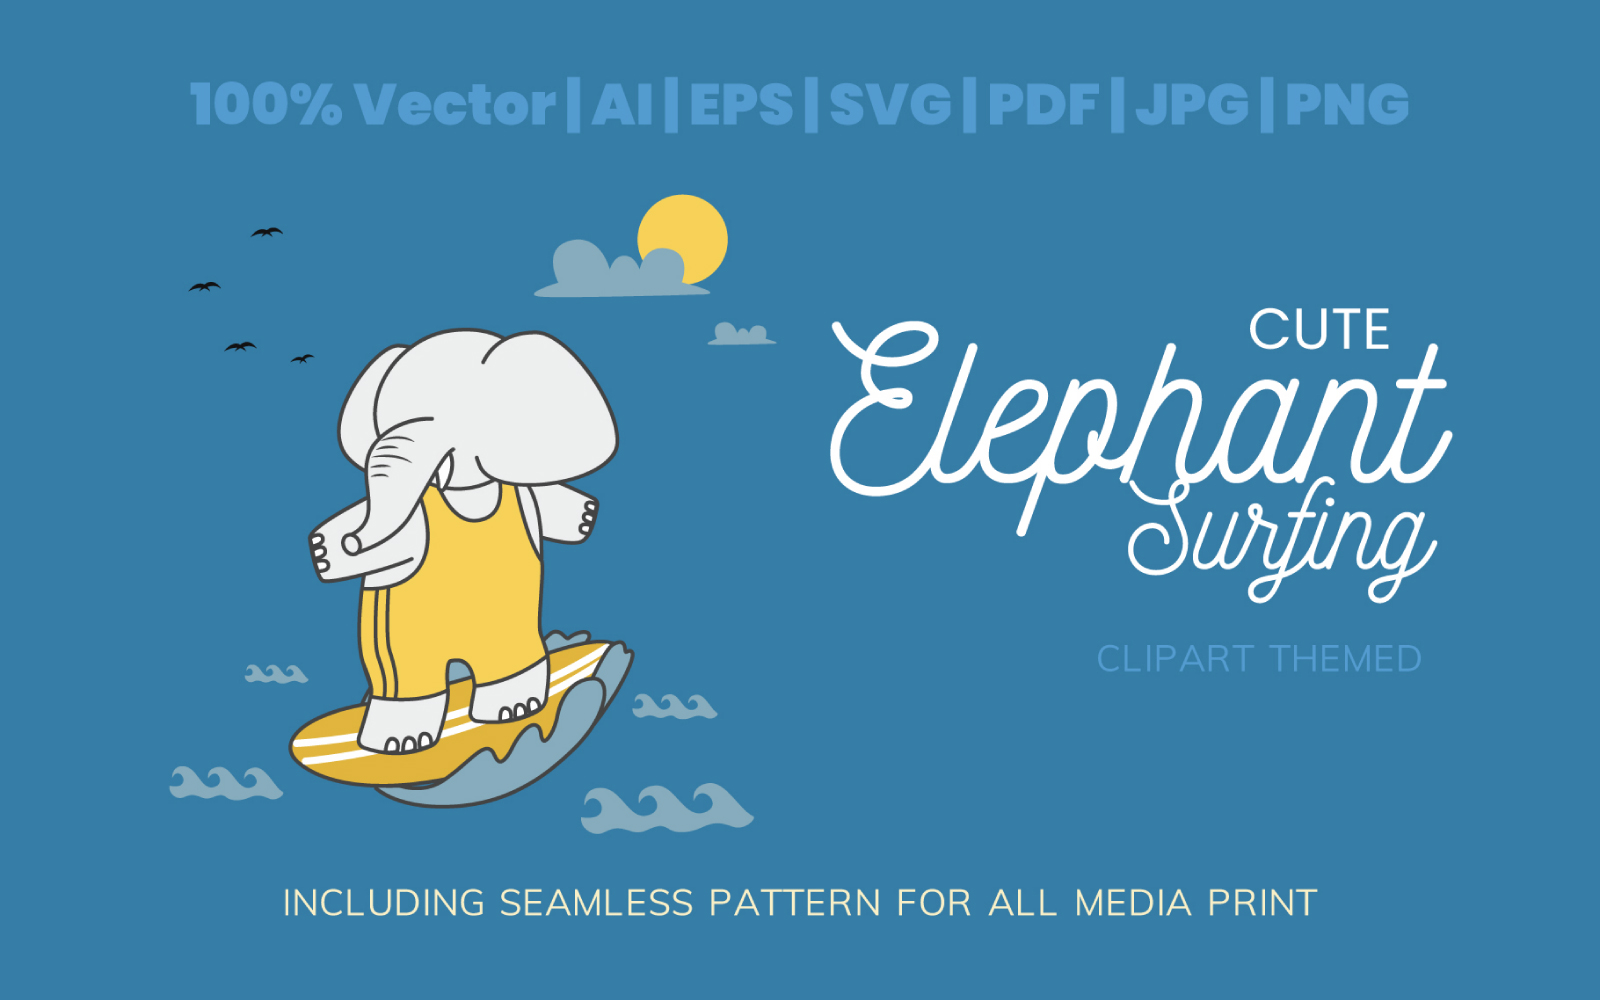 Cute Elephant Surfing Illustration Themed